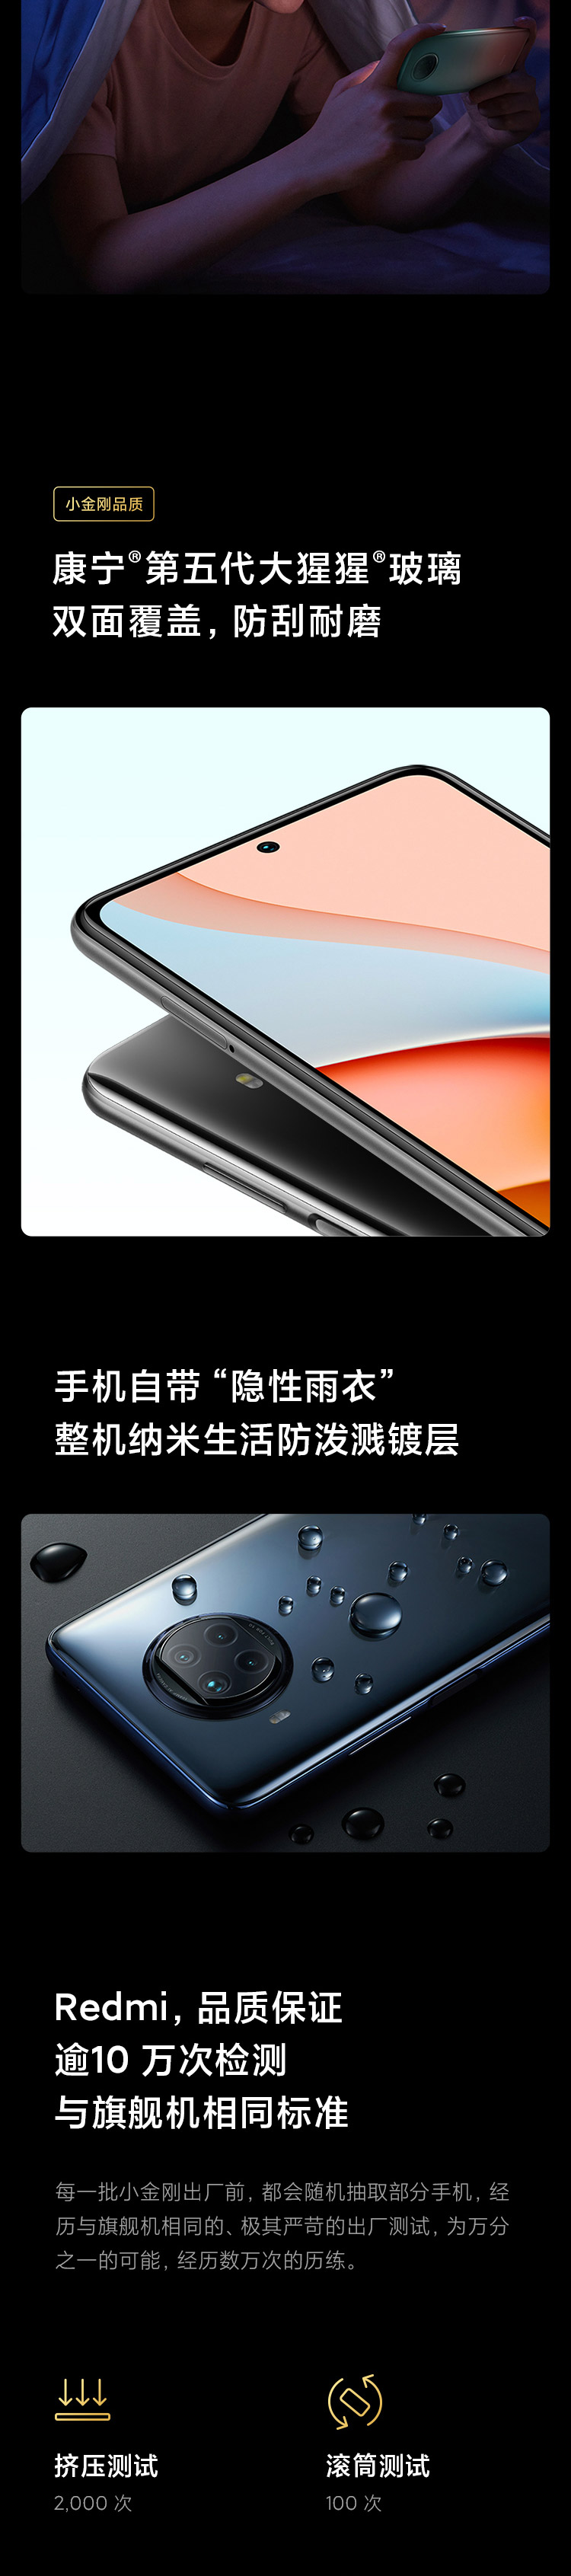 Redmi Note 9 Pro 5G 一亿像素 骁龙750G 33W快充 120Hz刷新率 湖光秋色 8GB+128GB 智能手机 小米 红米